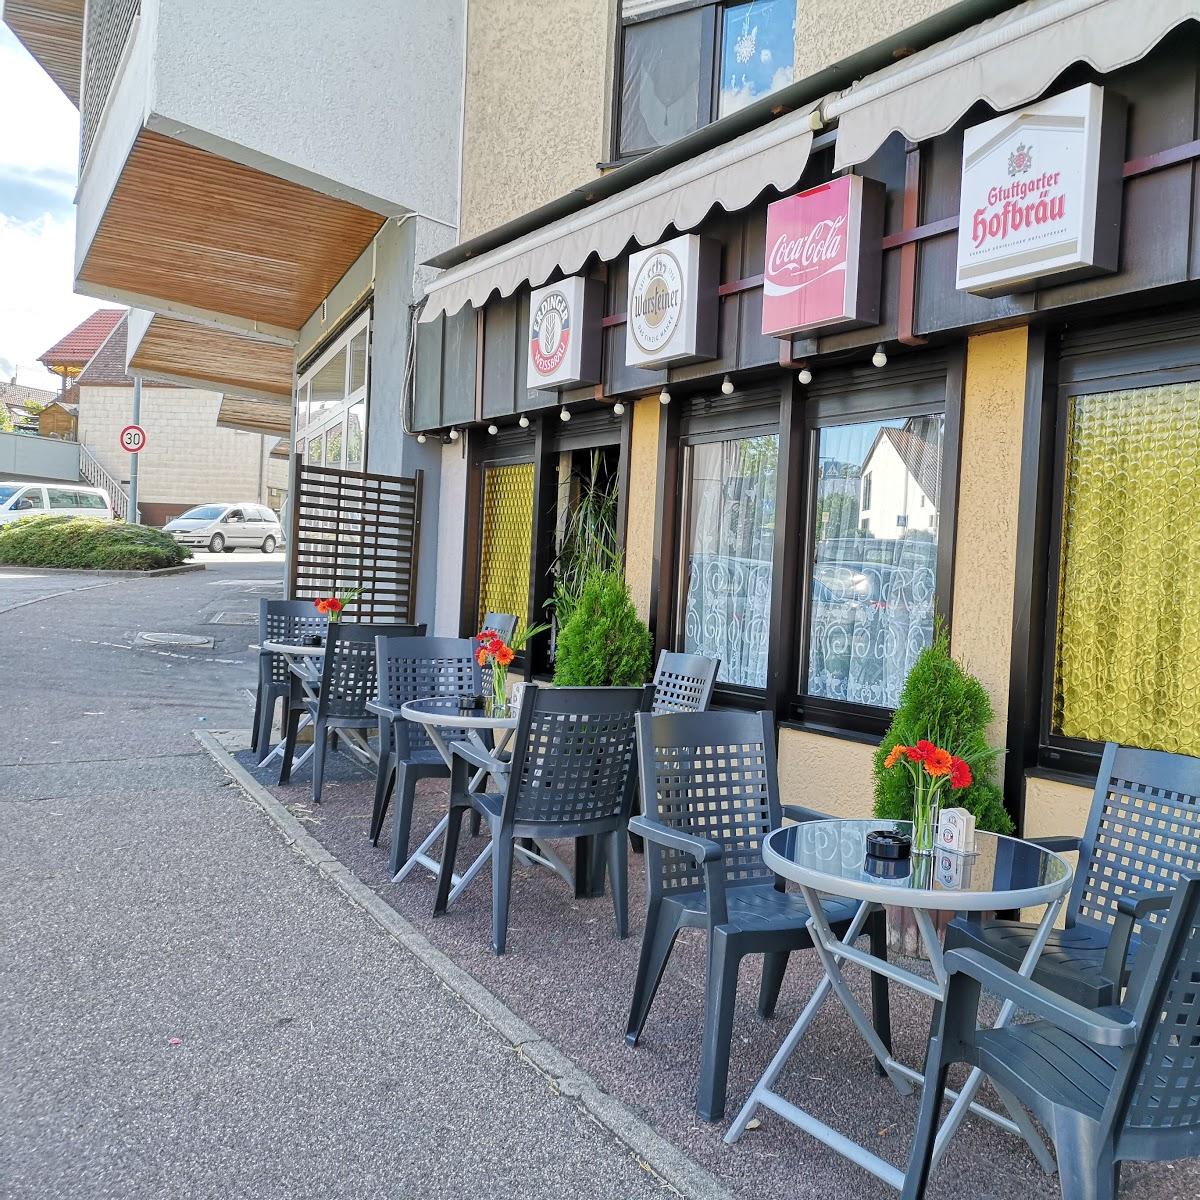 Restaurant "Bierakademie" in Hemmingen